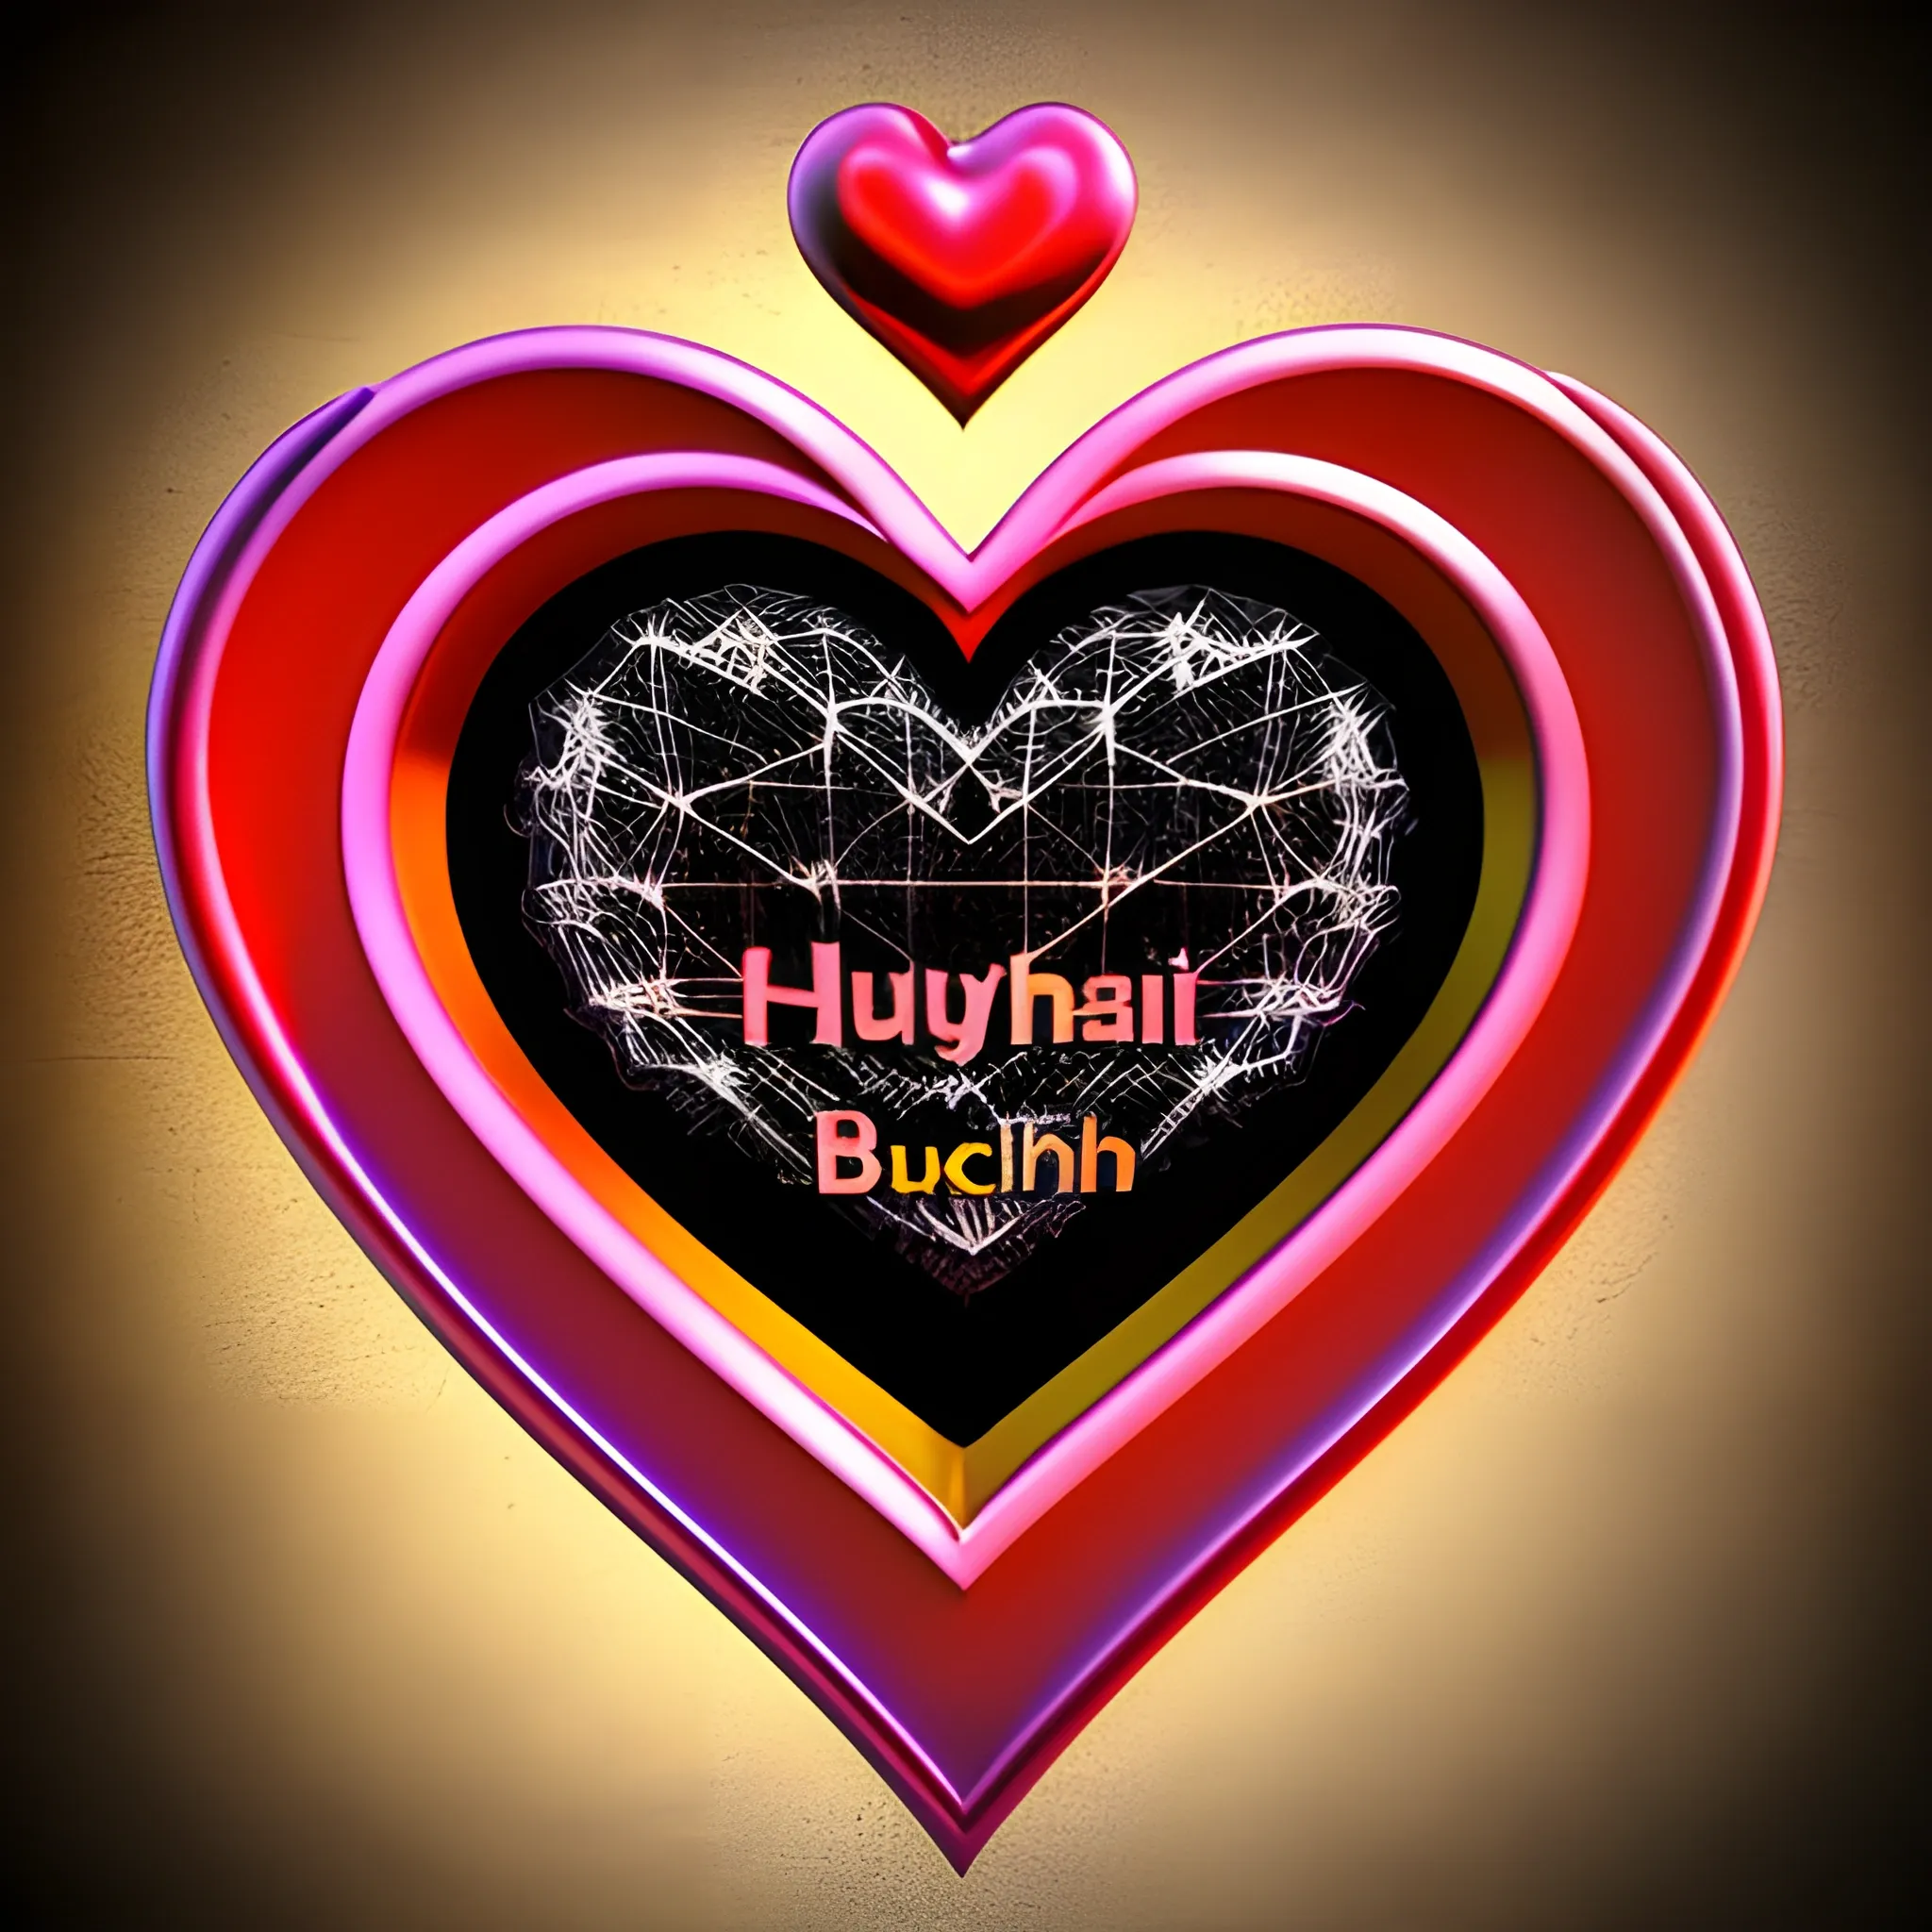 syed ahmed bukhari heart 3d logo with text